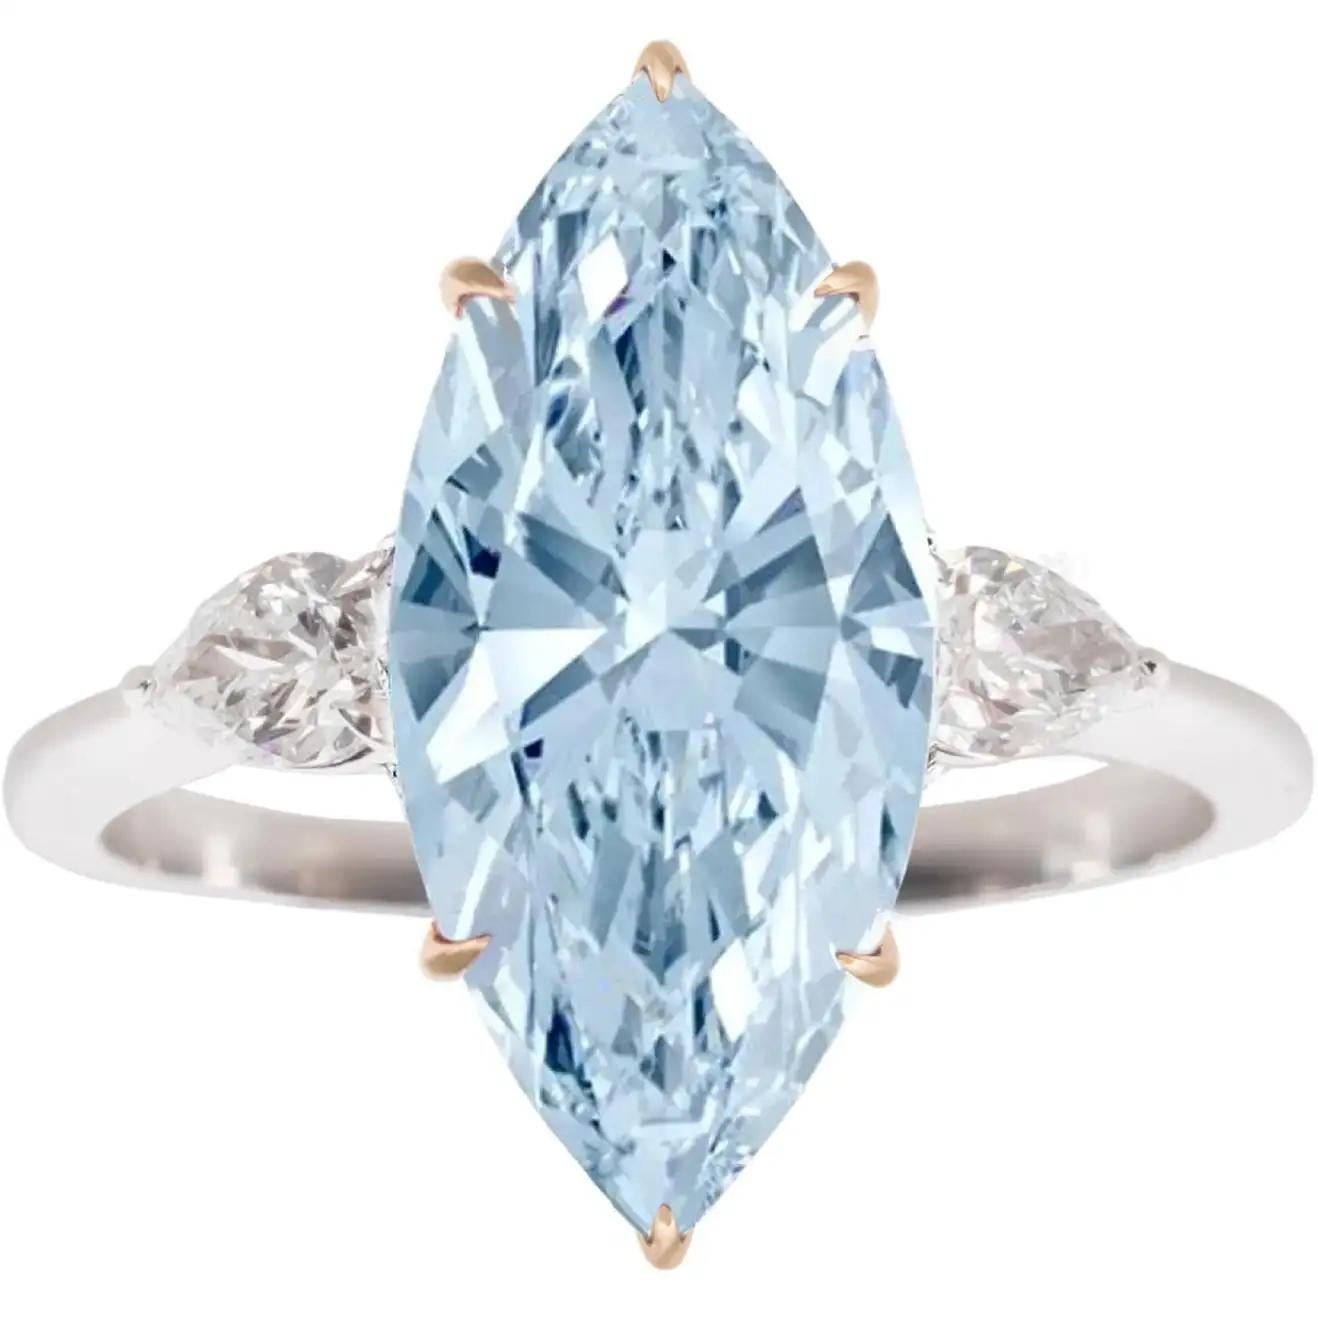 3 carat flawless diamond price